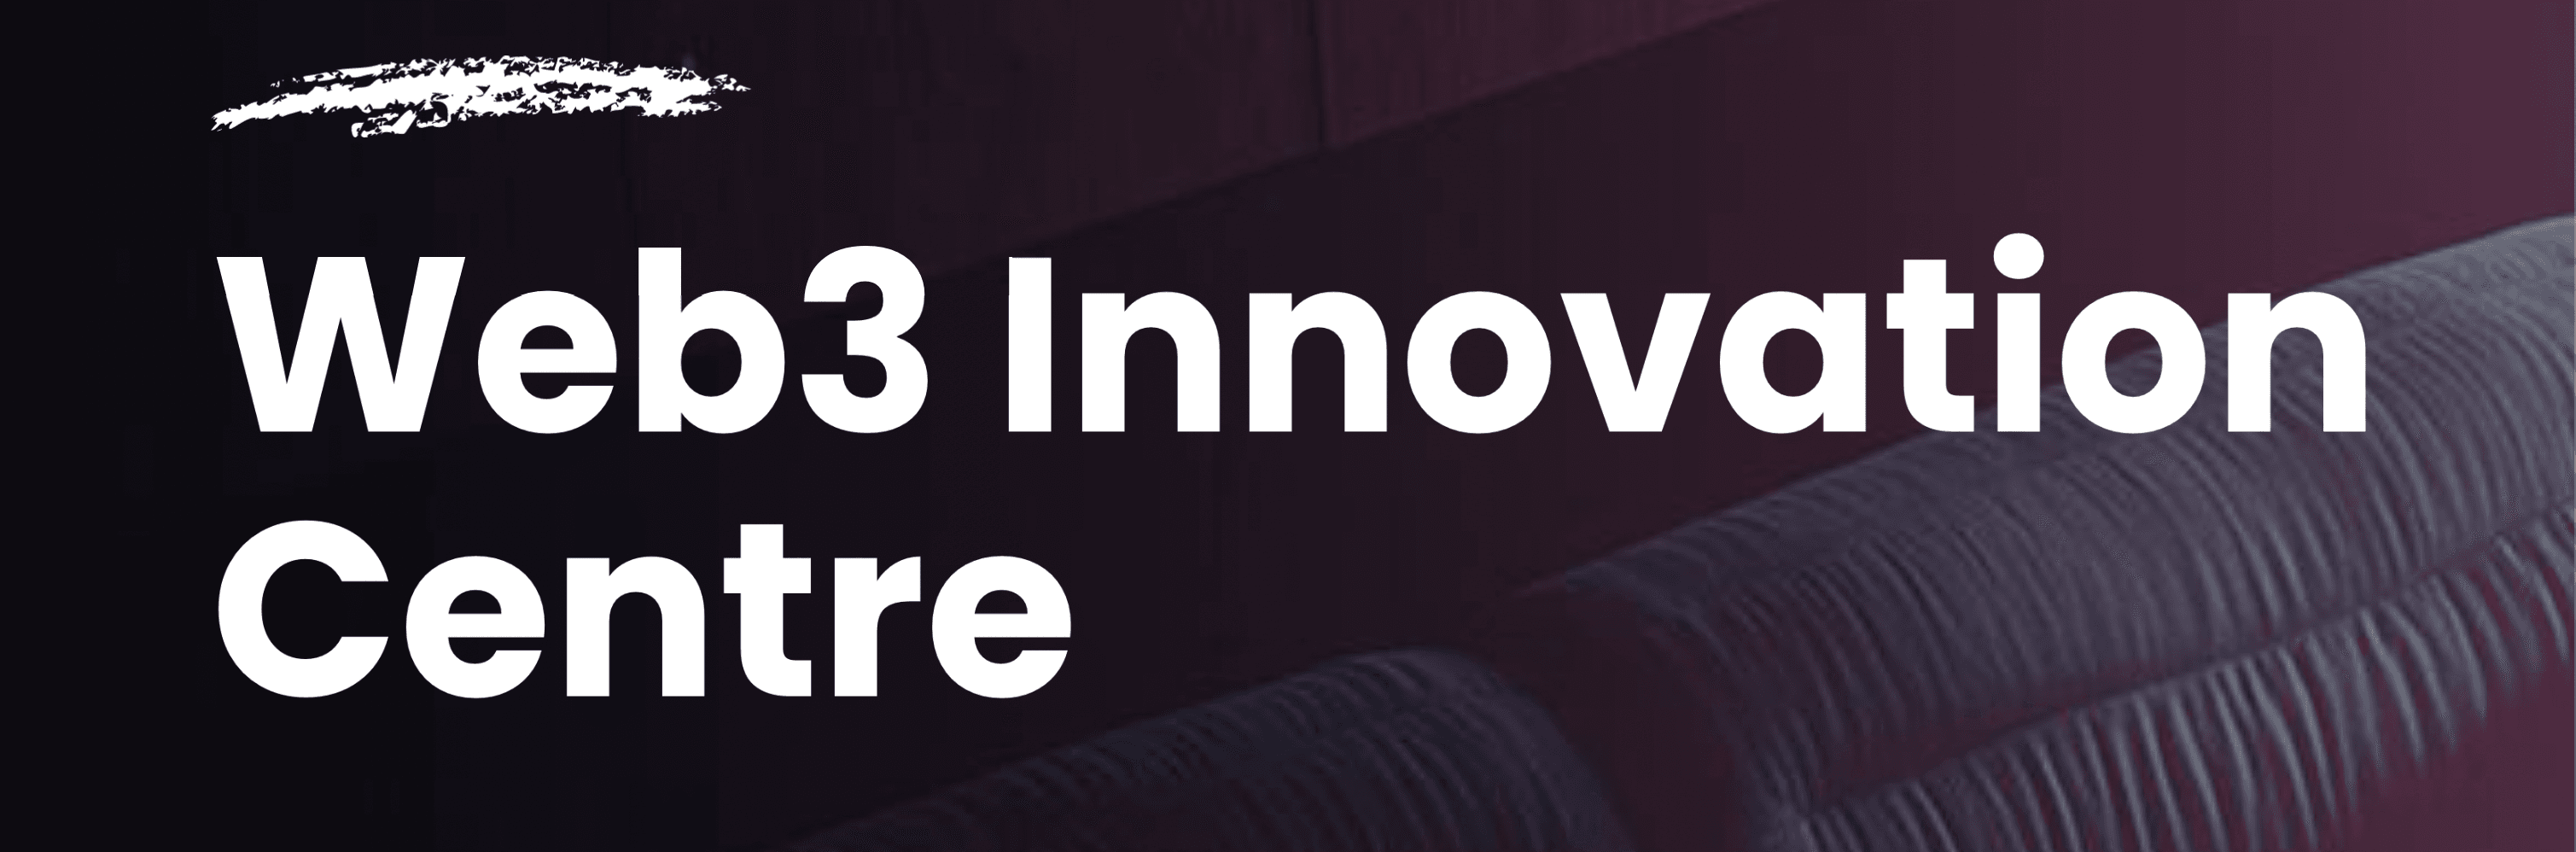 web3_innovation banner